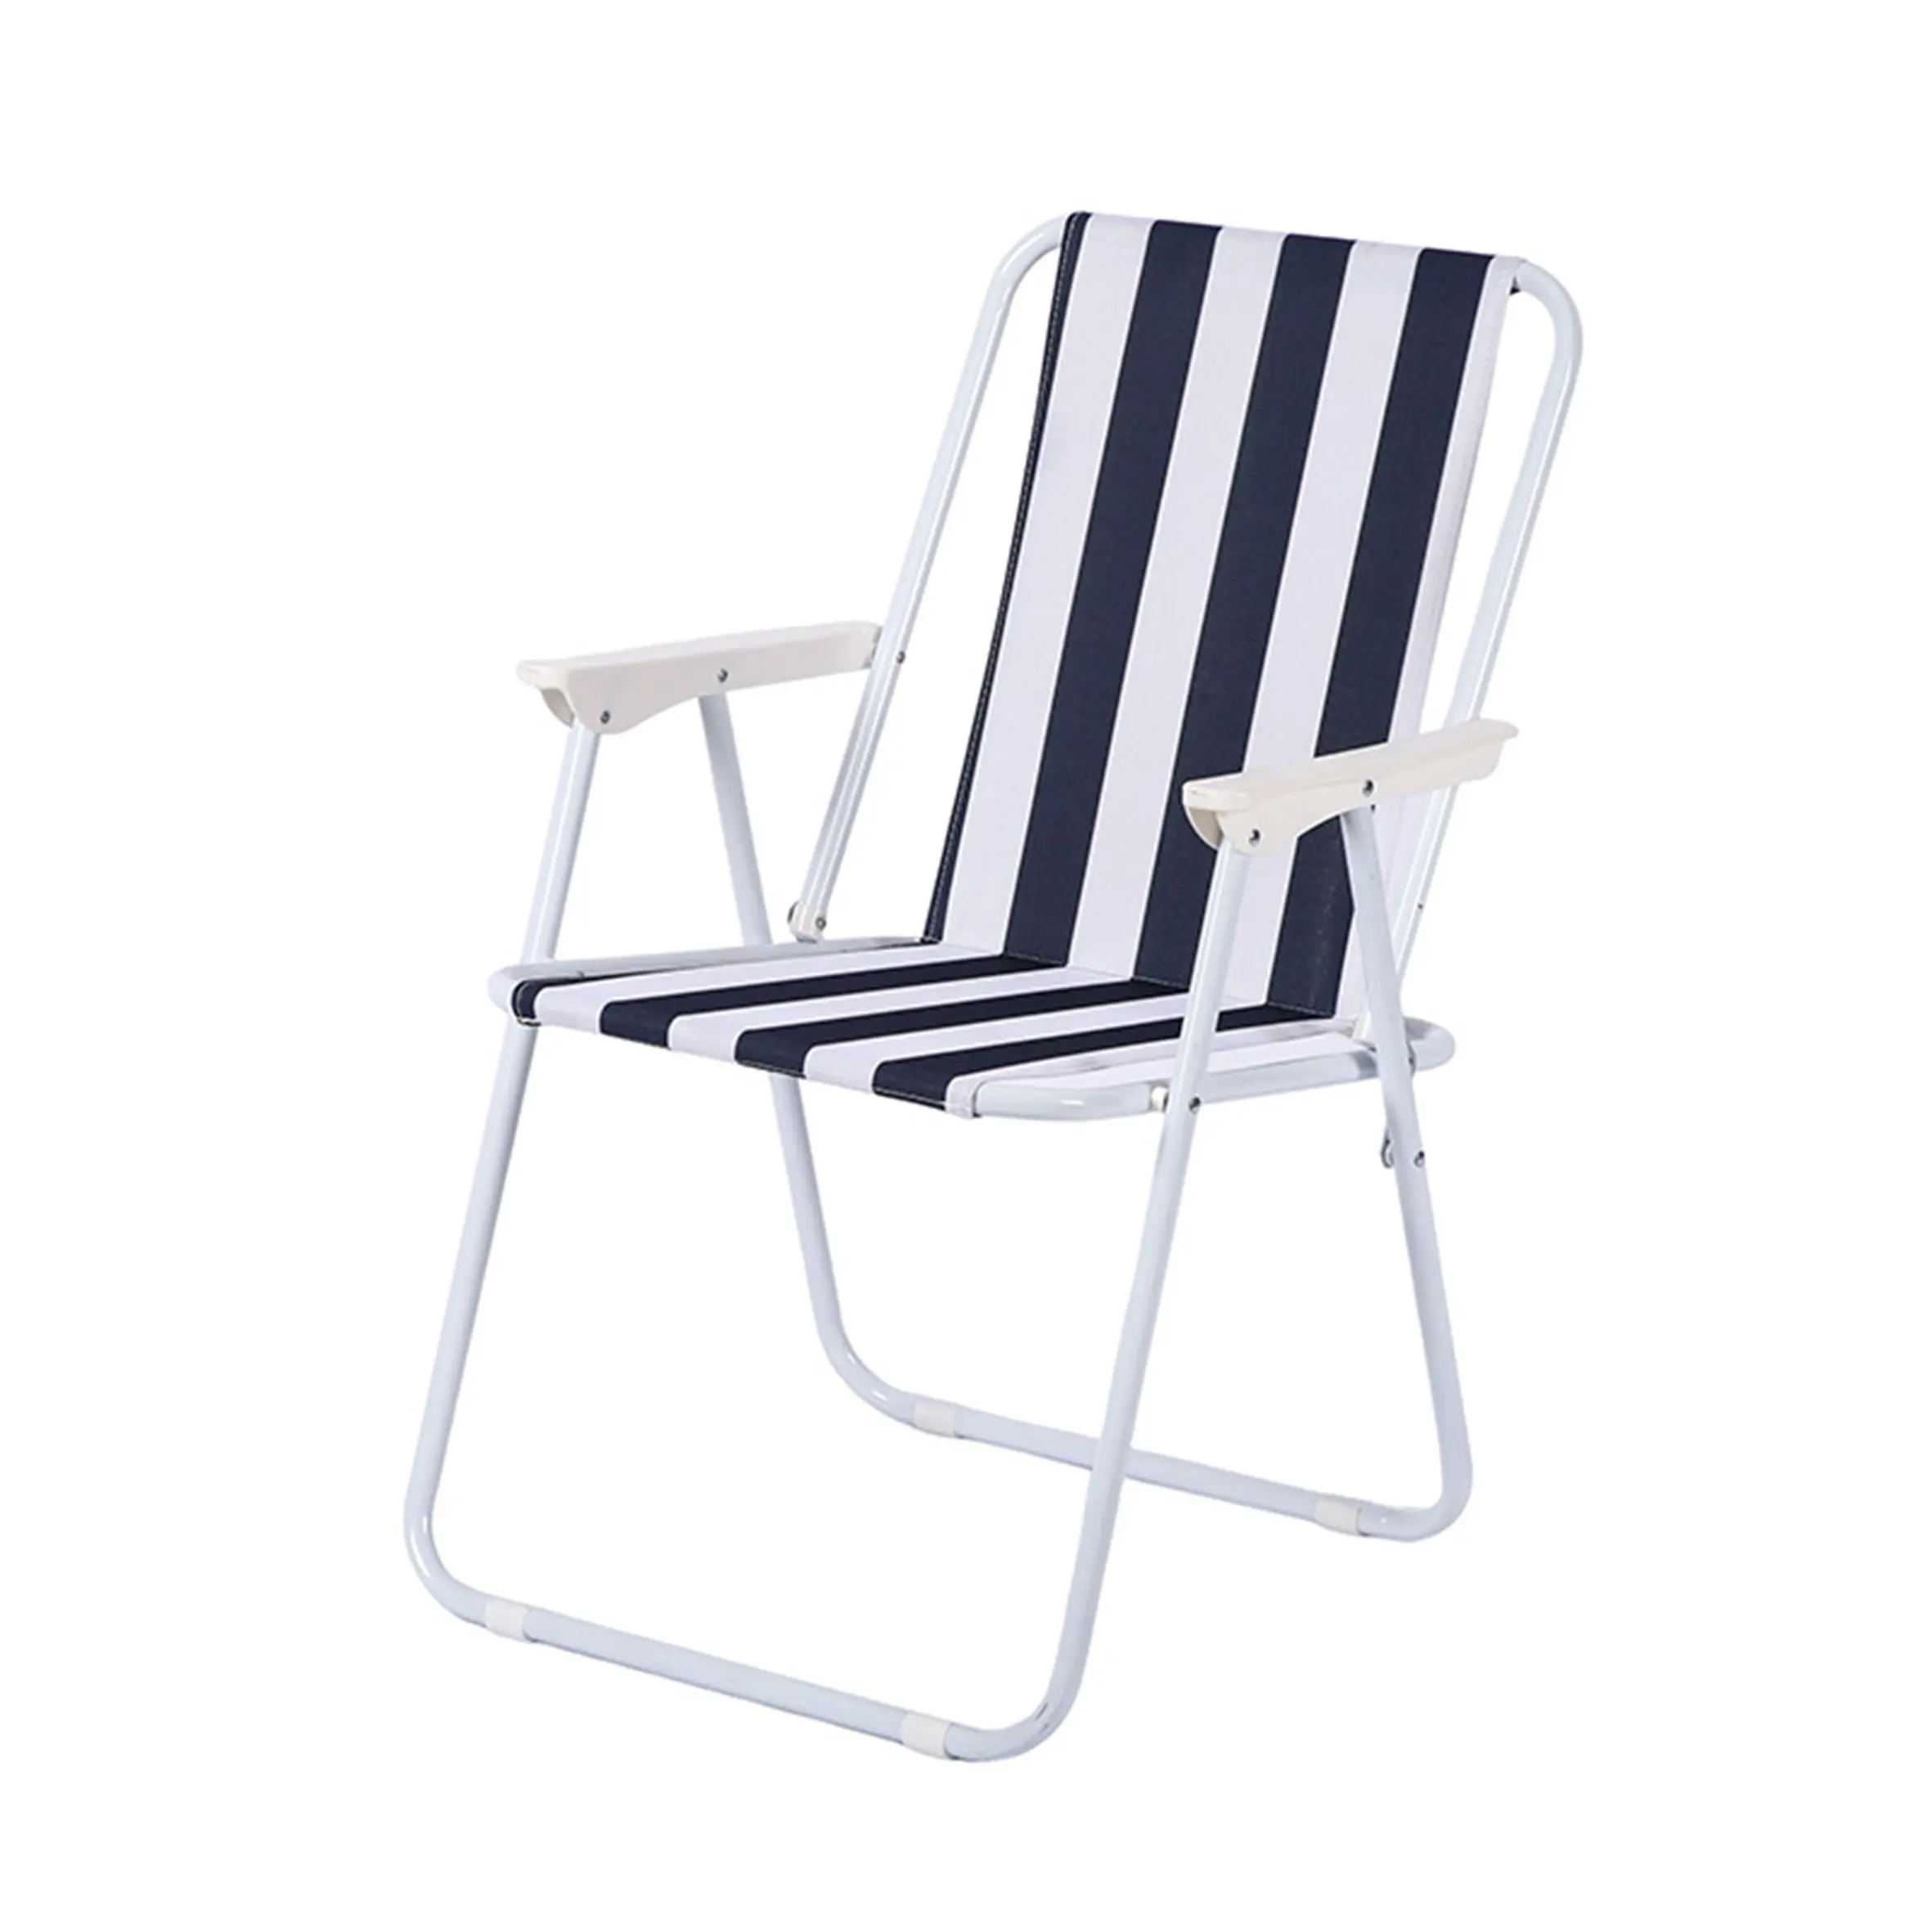 MANUFACTURER 150kg tall camping,plastic stool plastic portable foldable stools folding stool/